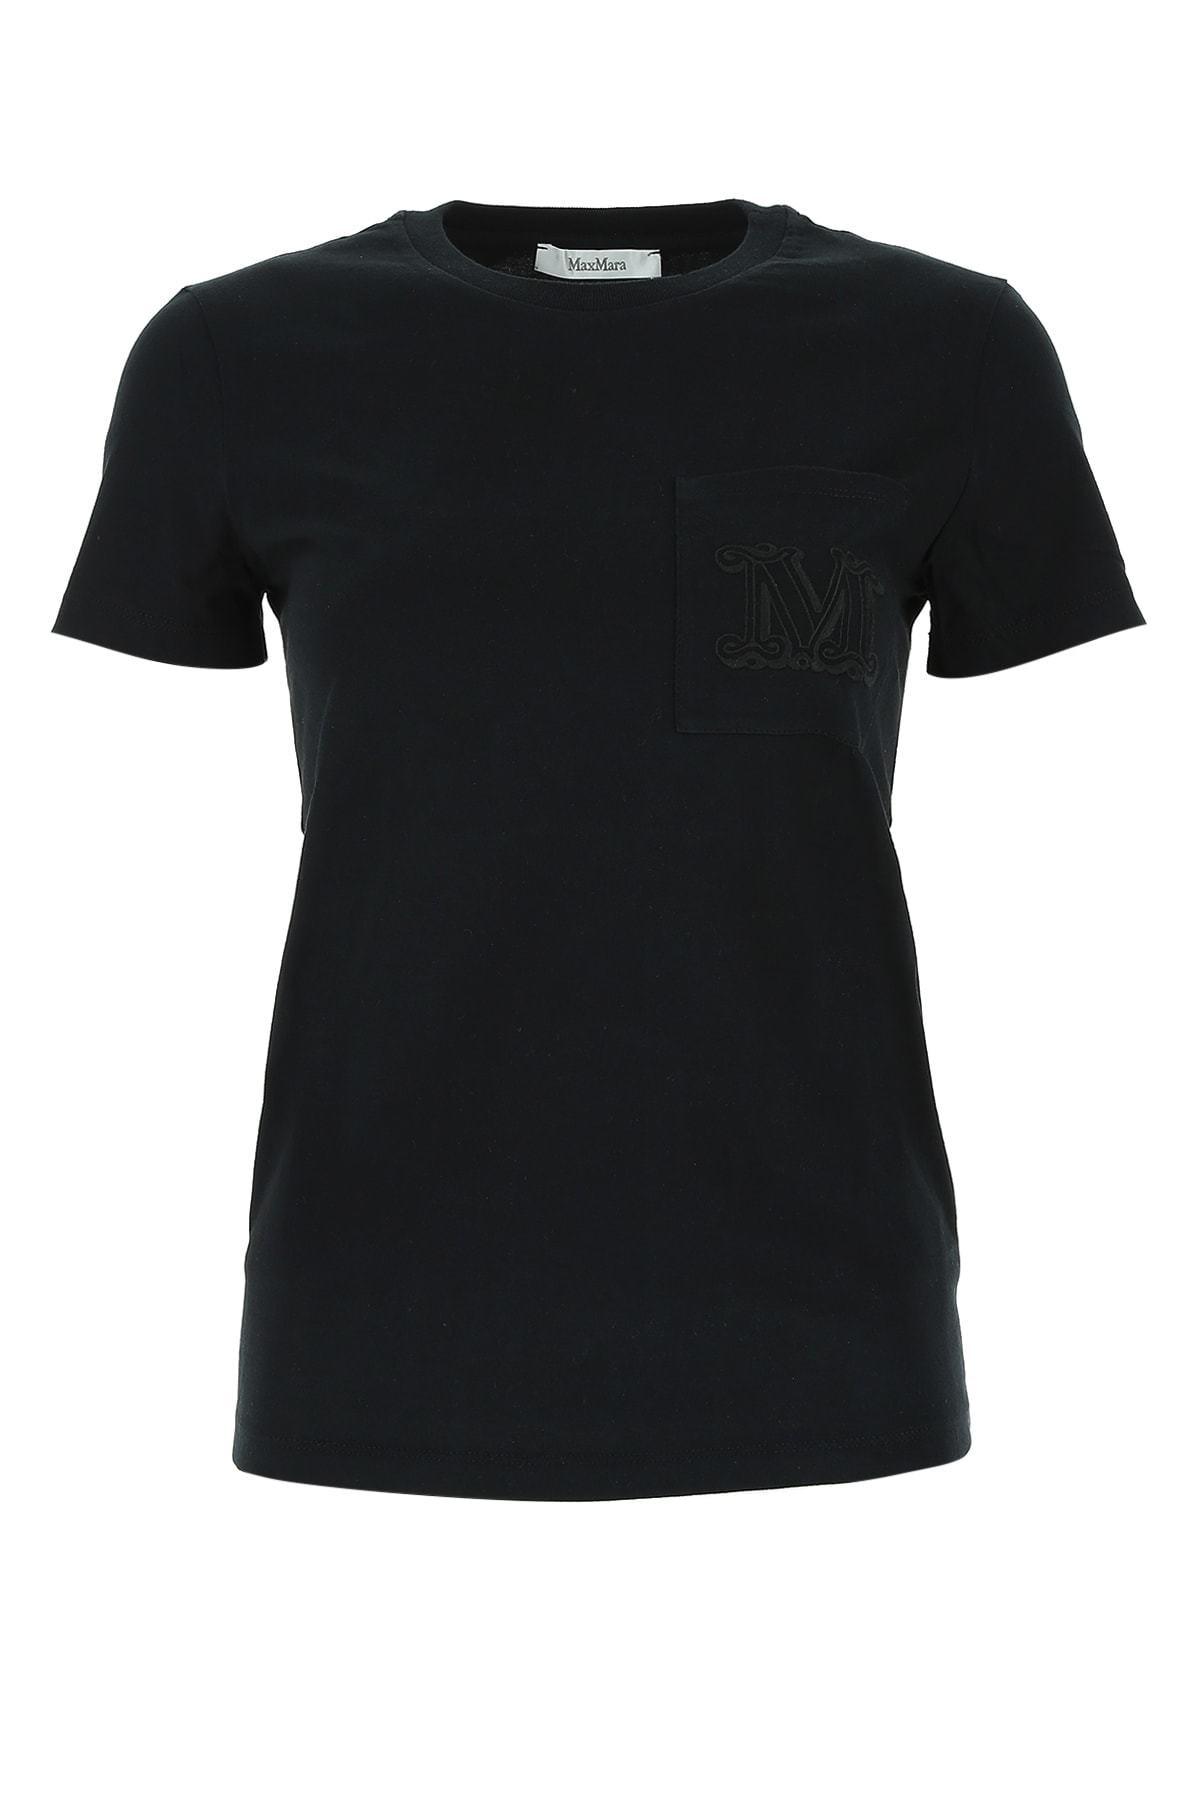 Max Mara Cotton Crewneck T-shirt in Navy (Blue) - Lyst